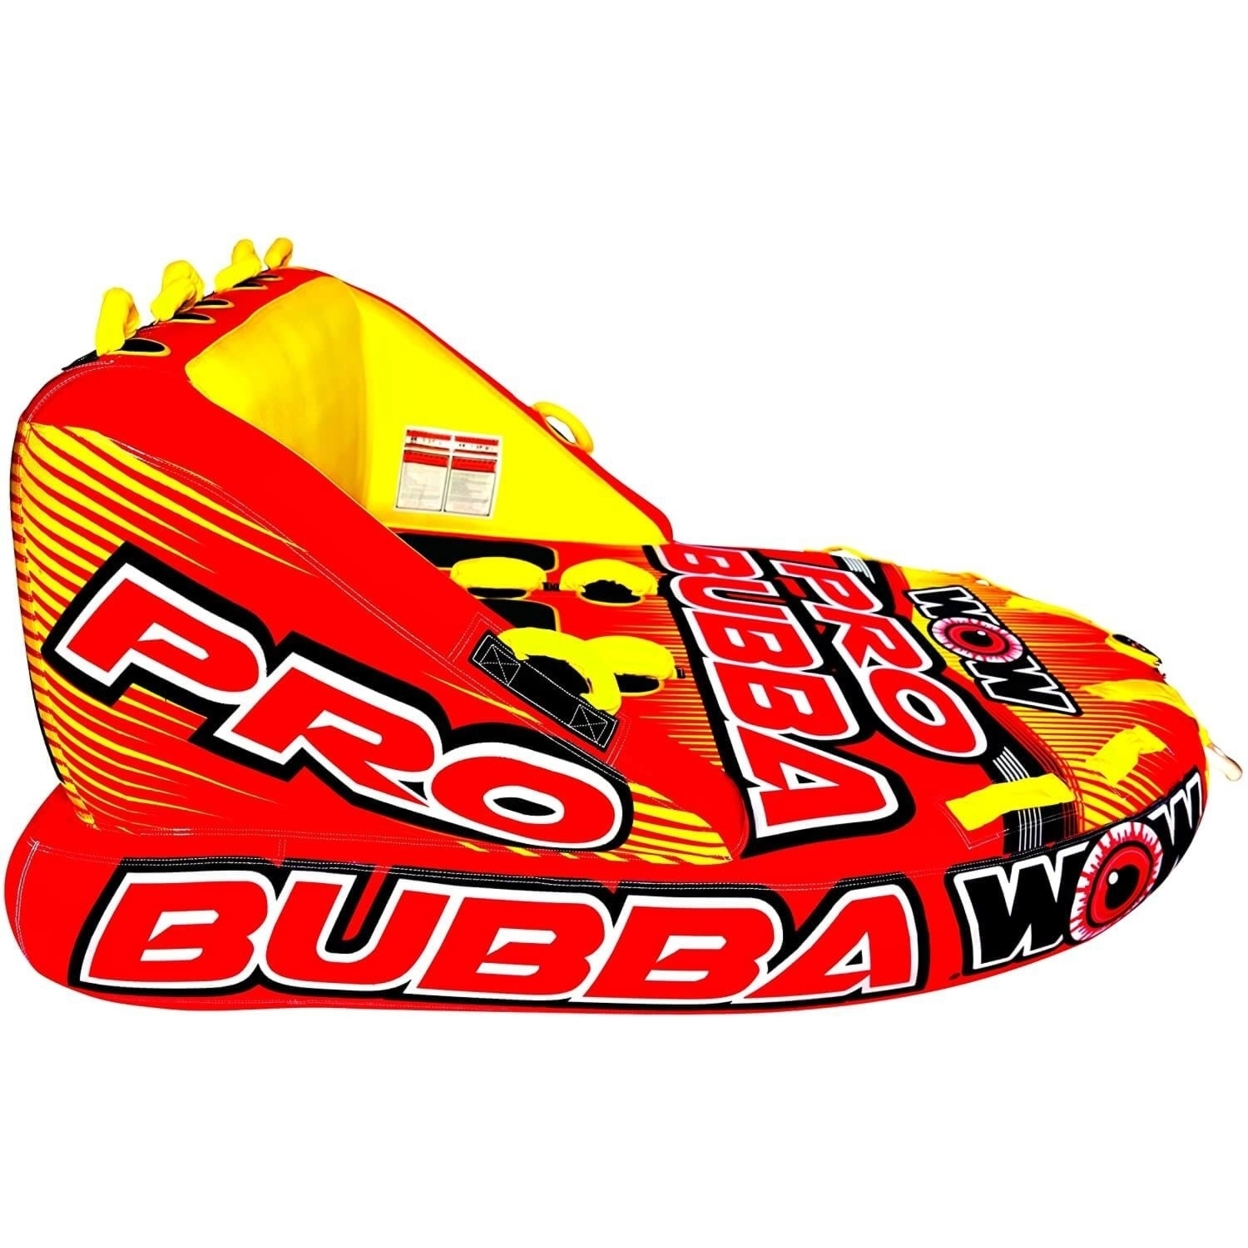 WOW Sports Super Bubba Pro Series (20-1080)